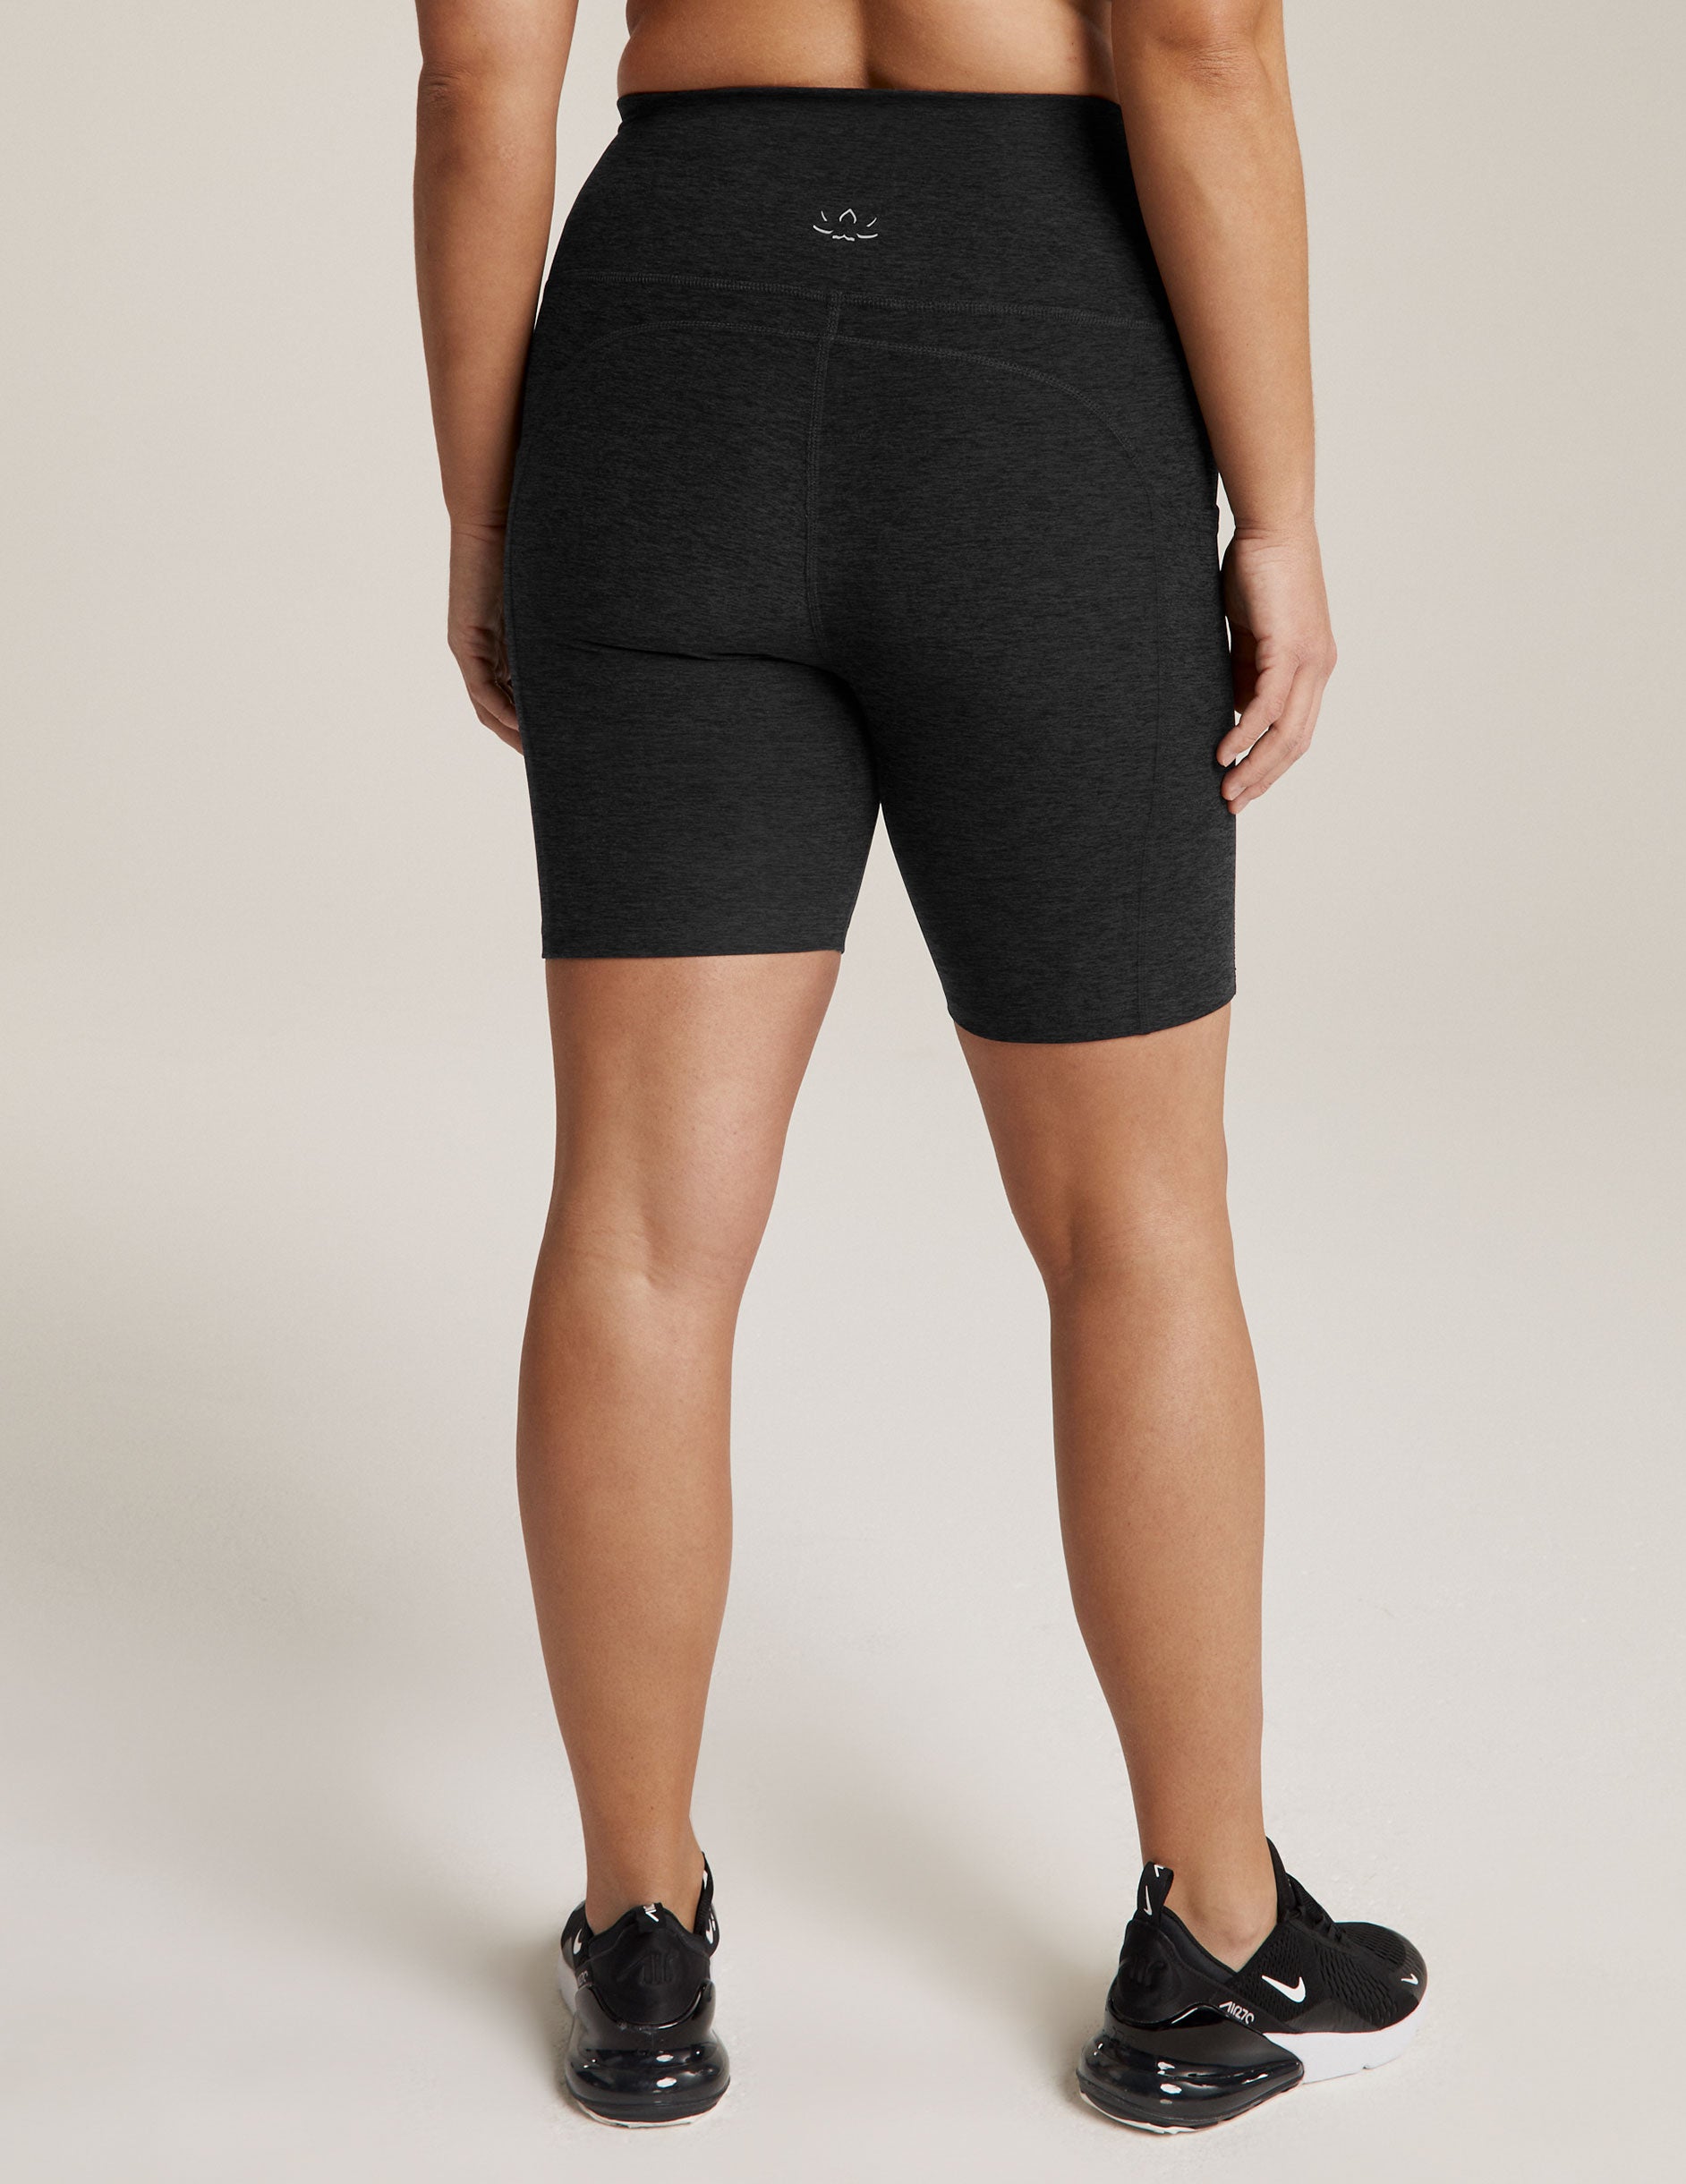 black shorts with pocket detail